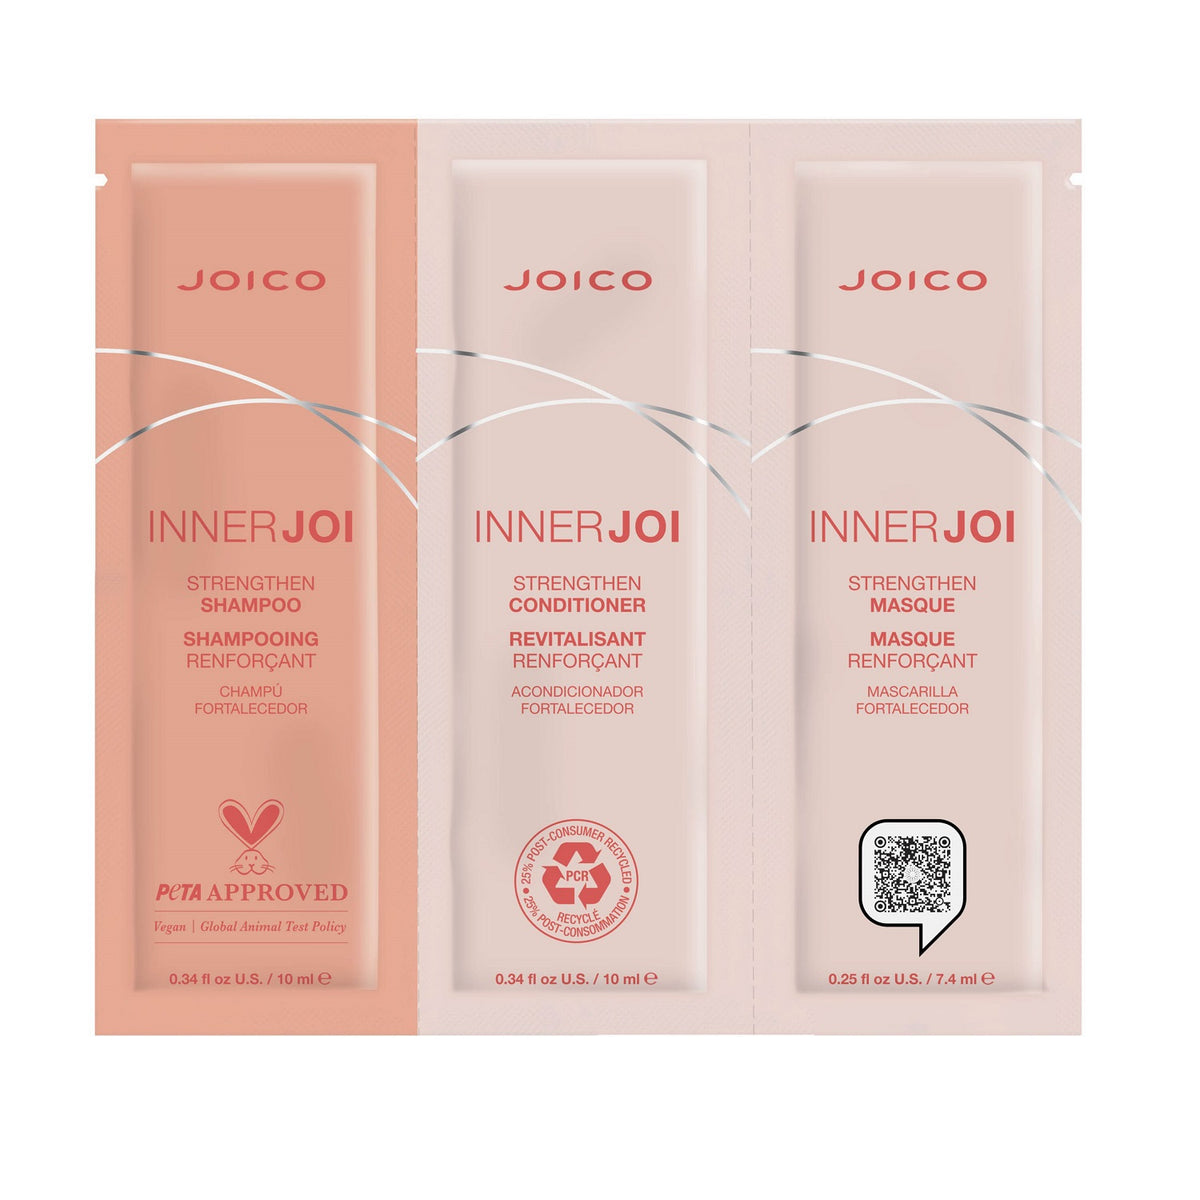 Joico InnerJoi Strengthen Trio Haarpflegeset Shampoo 10 ml + Conditioner 10 ml + Masque  7.4 ml